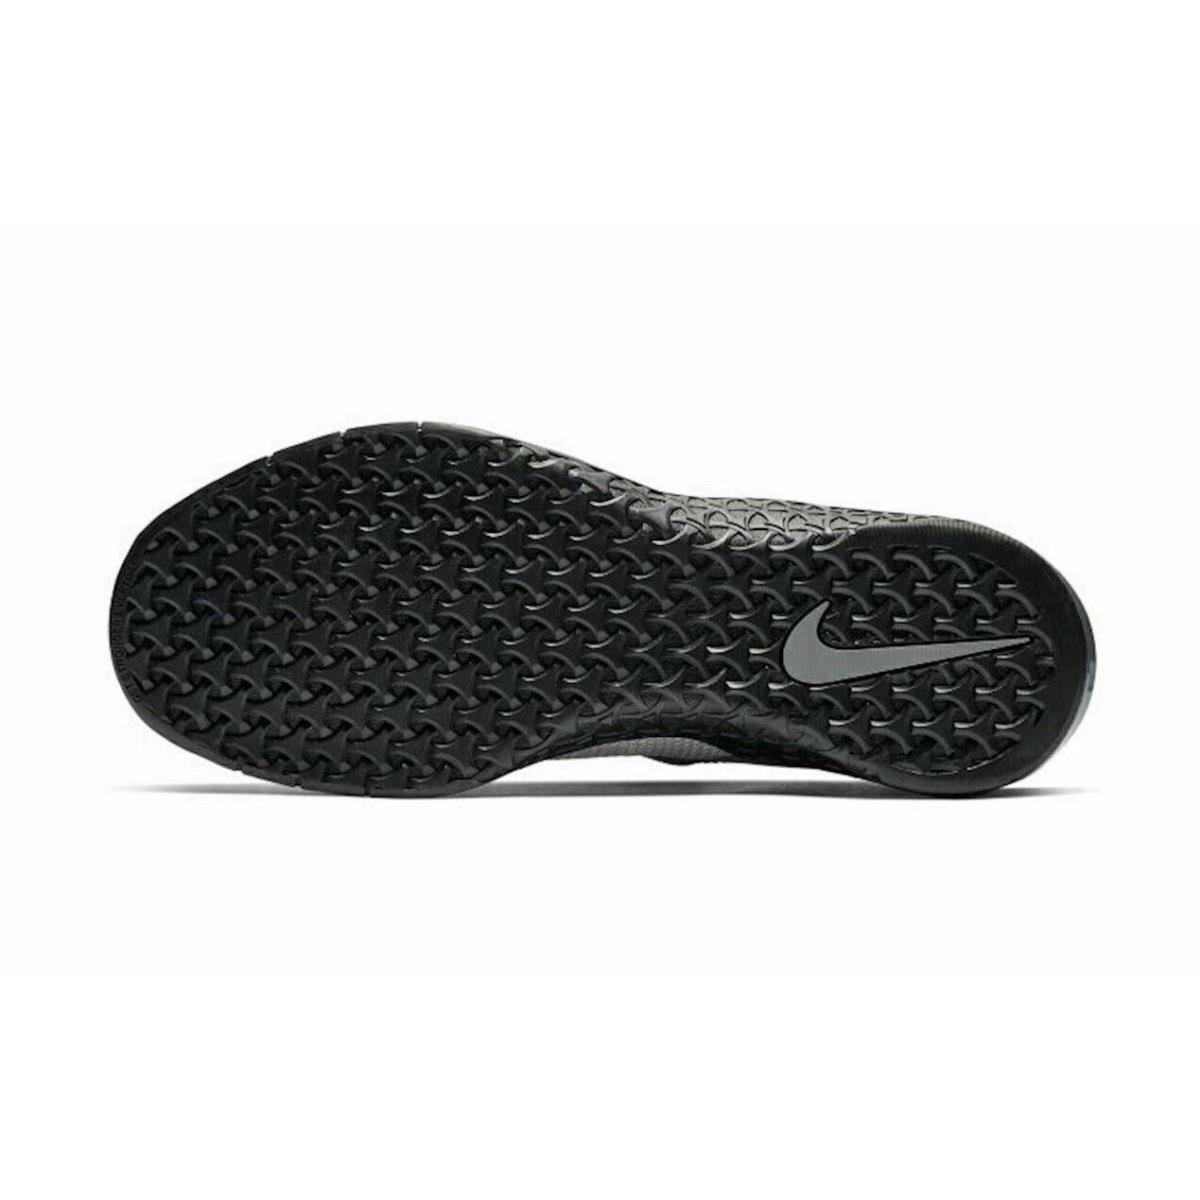 Nike shoes Metcon Flyknit - Cool Grey Black 3